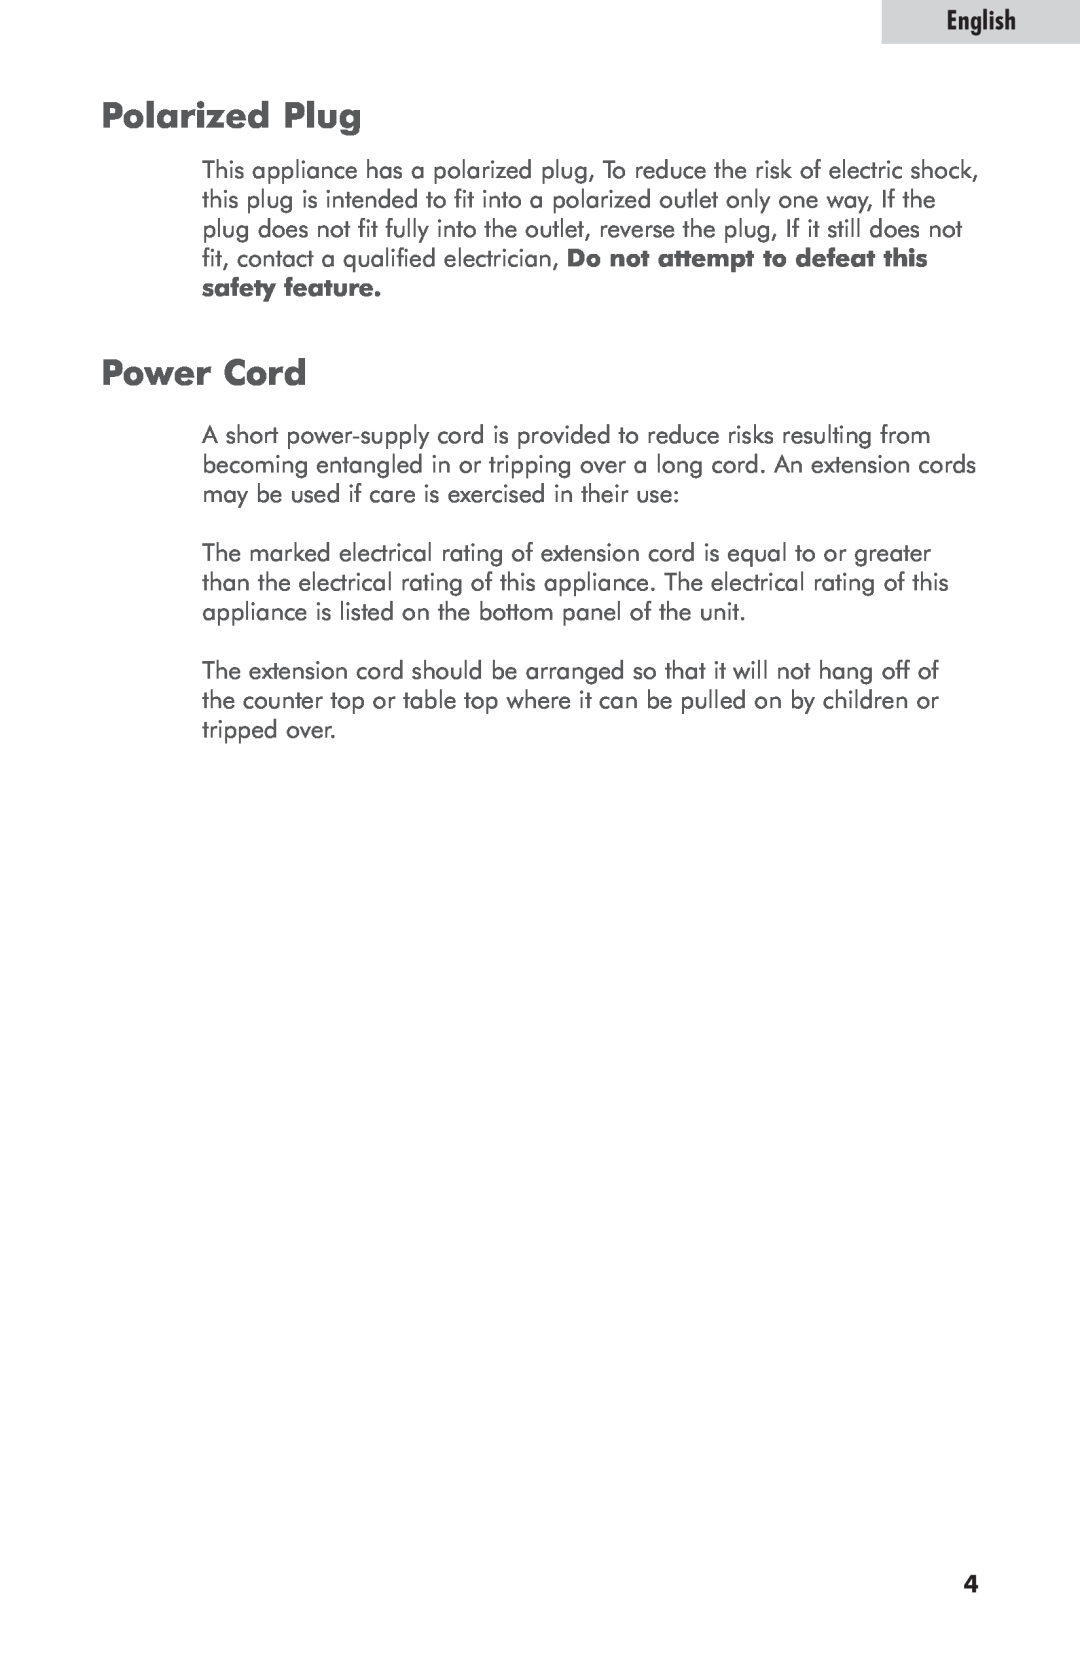 Haier HDC10SS user manual Polarized Plug, Power Cord, English 